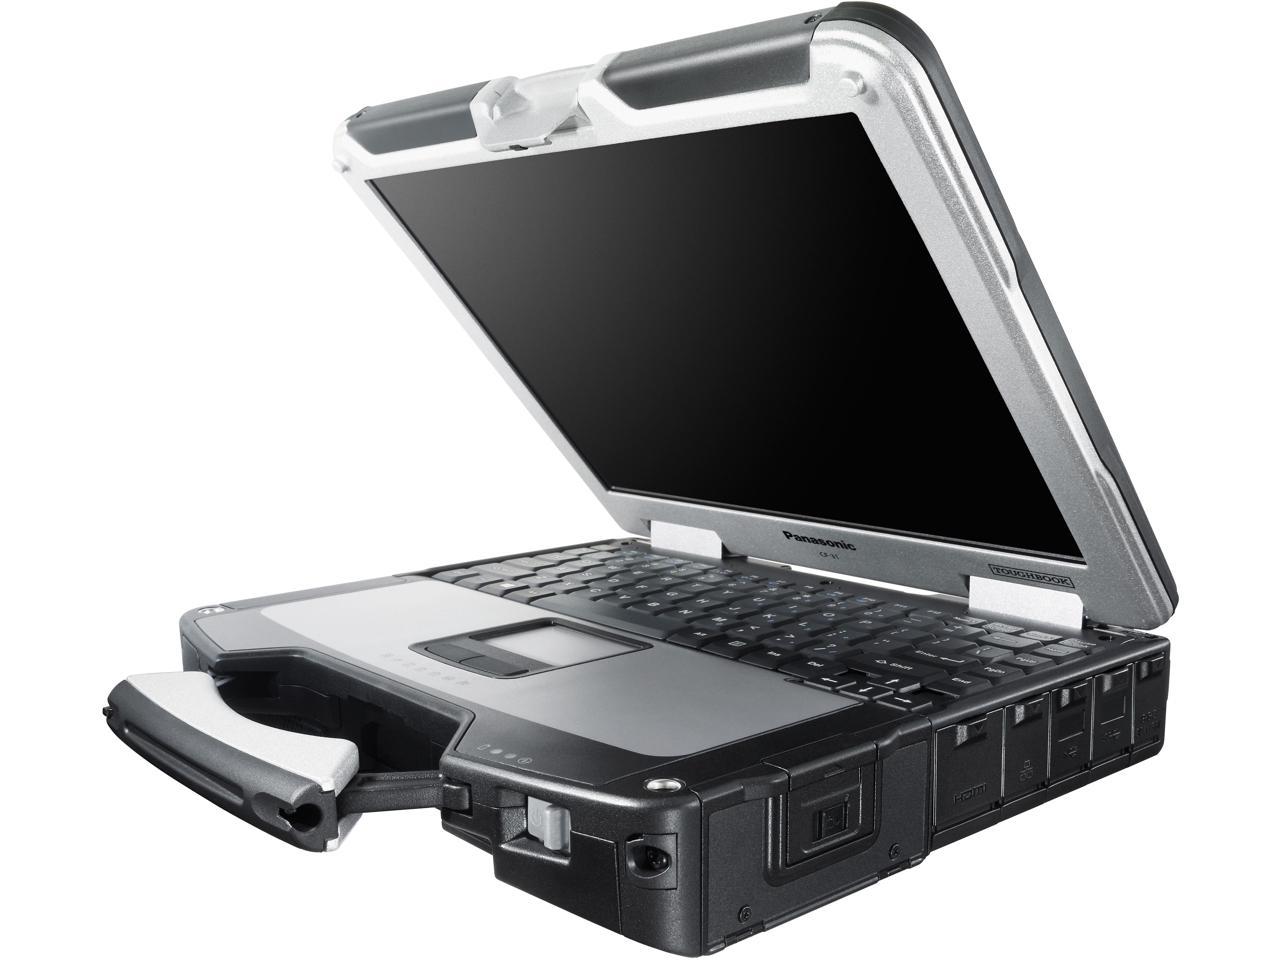 Panasonic Toughbook CF-31 MK3, Fully Rugged Laptop, 13.1